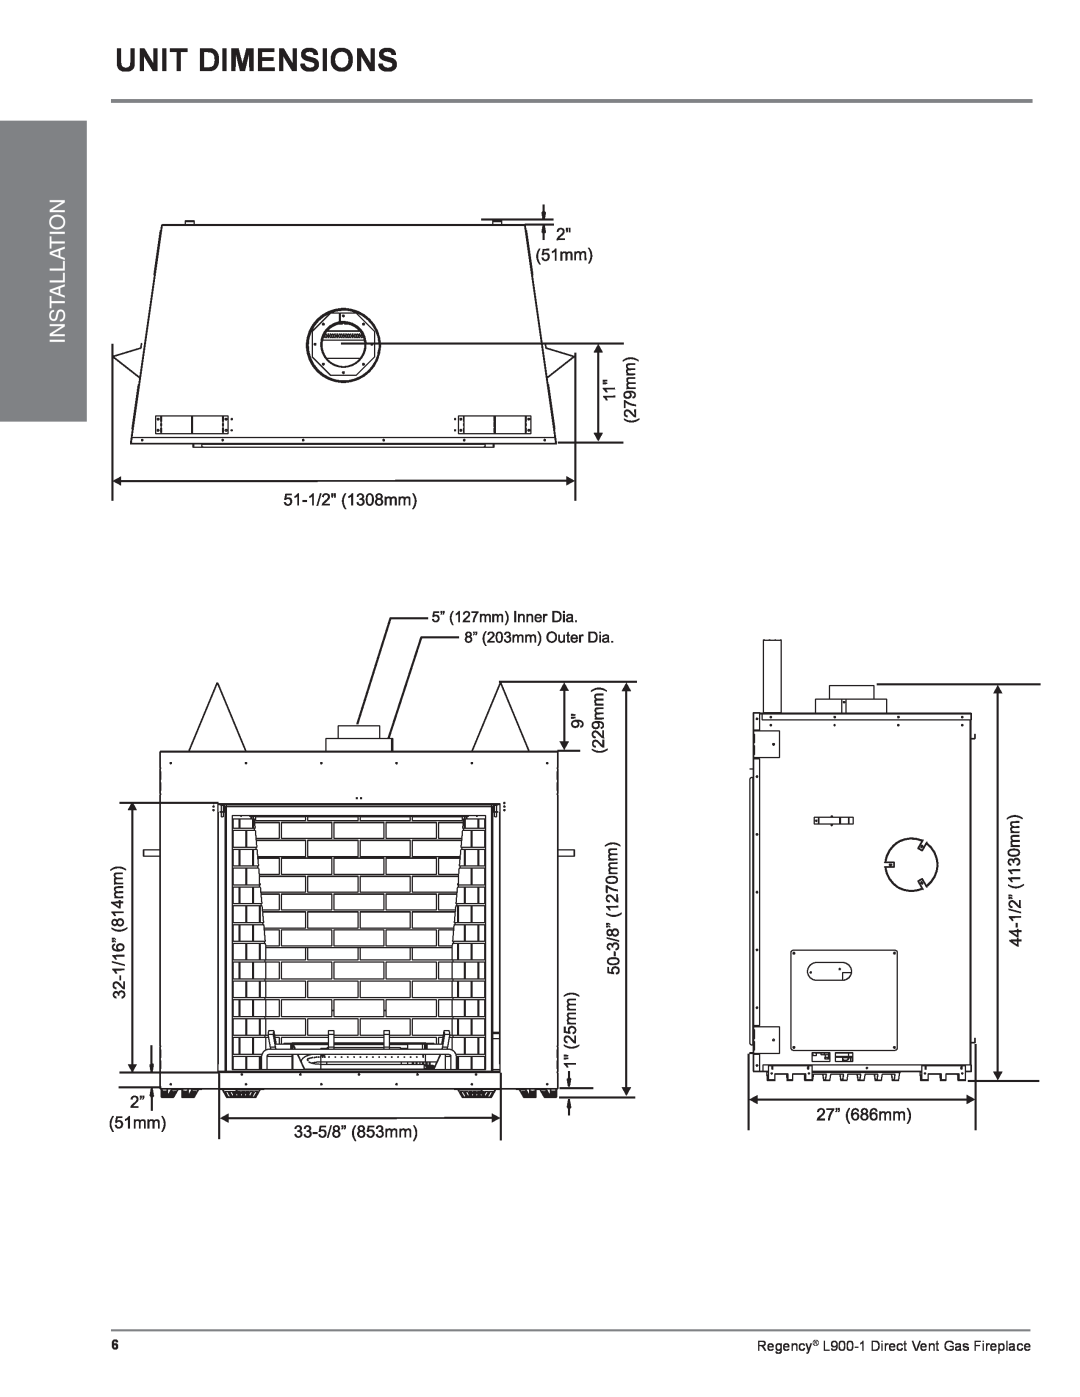 Regency installation manual Unit Dimensions, Installation, Regency L900-1Direct Vent Gas Fireplace 